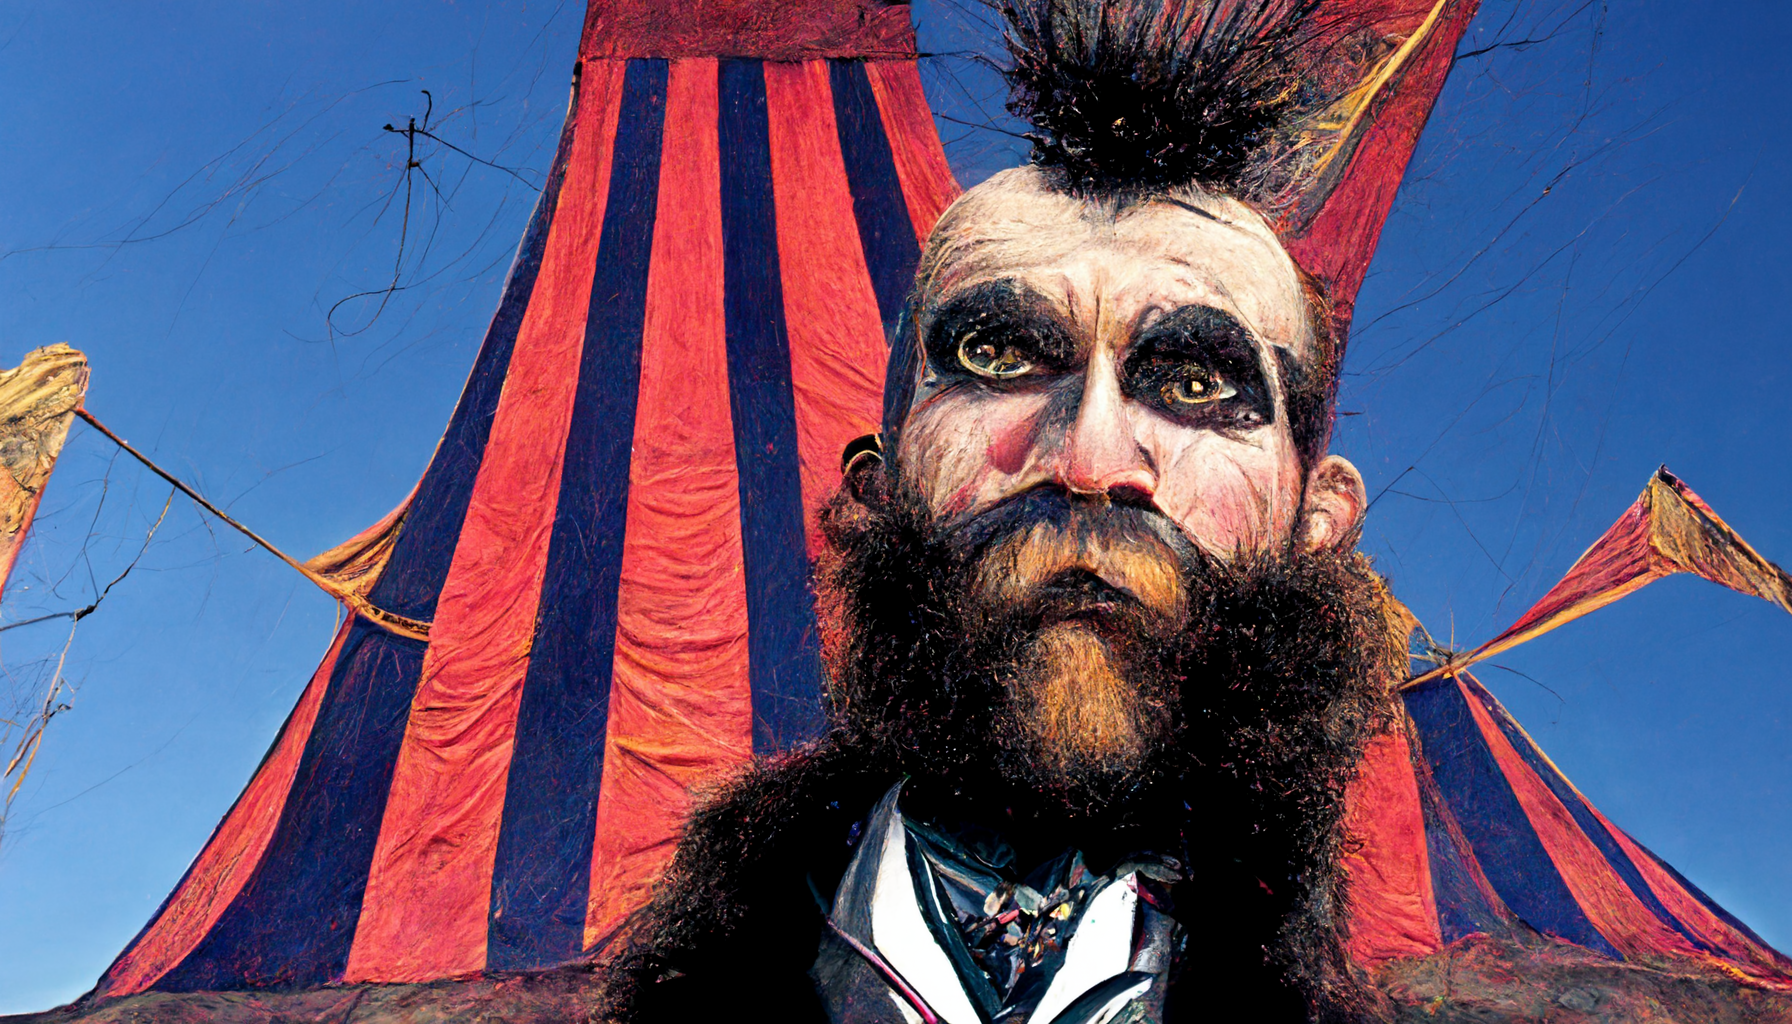 A circus ringmaster